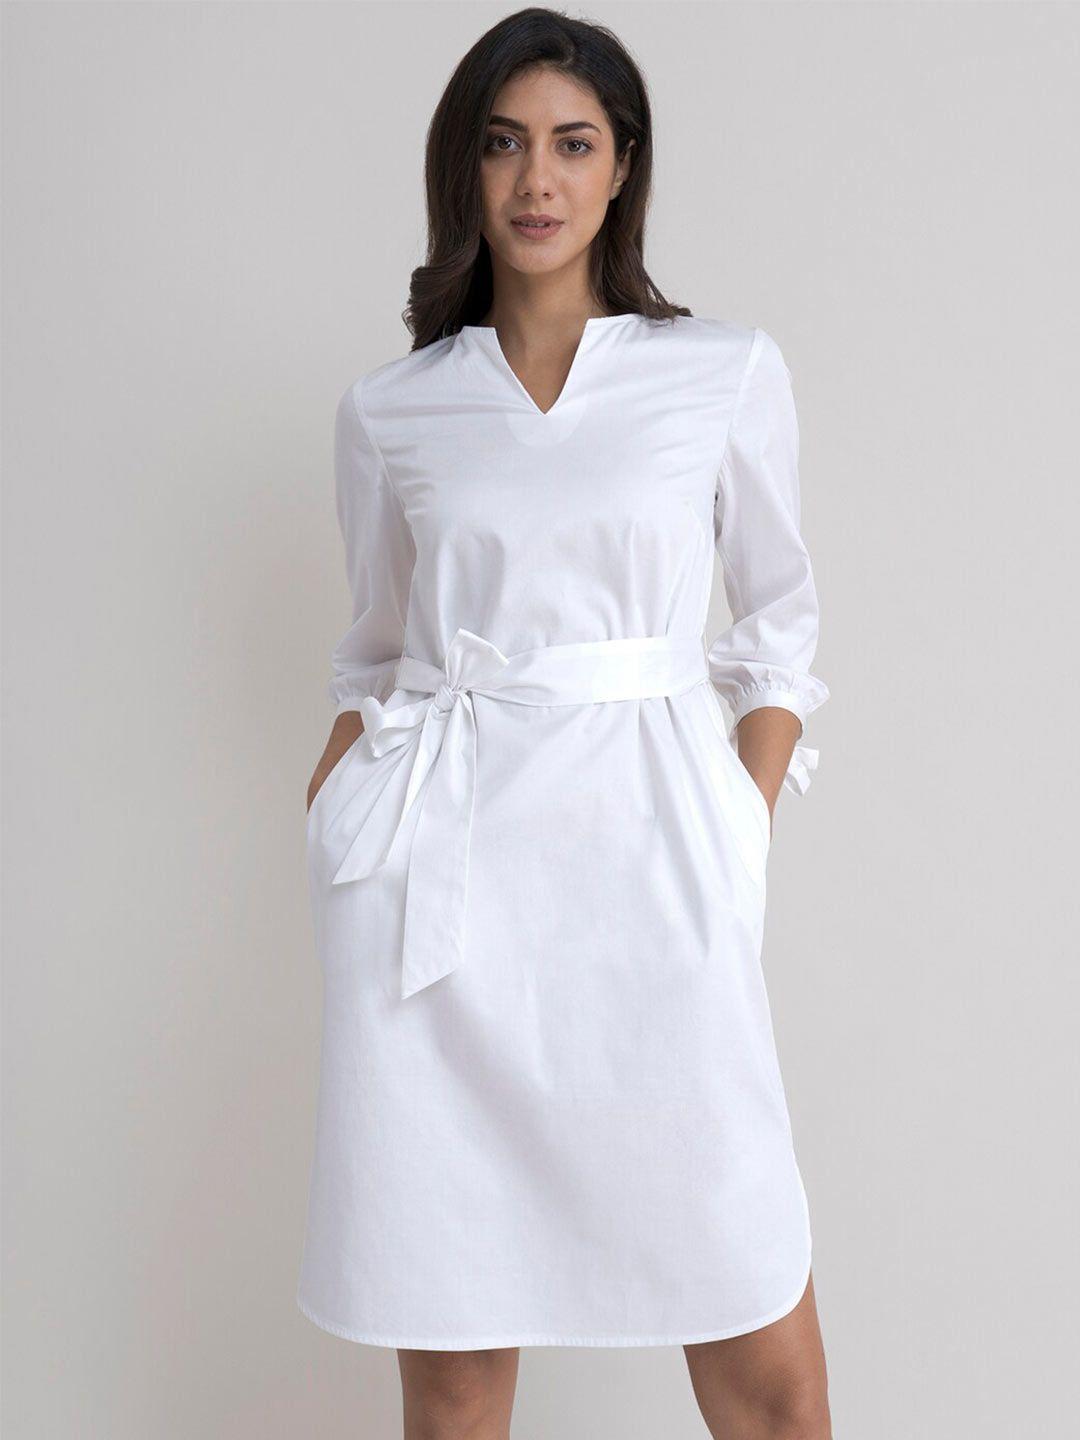 fablestreet white a-line dress